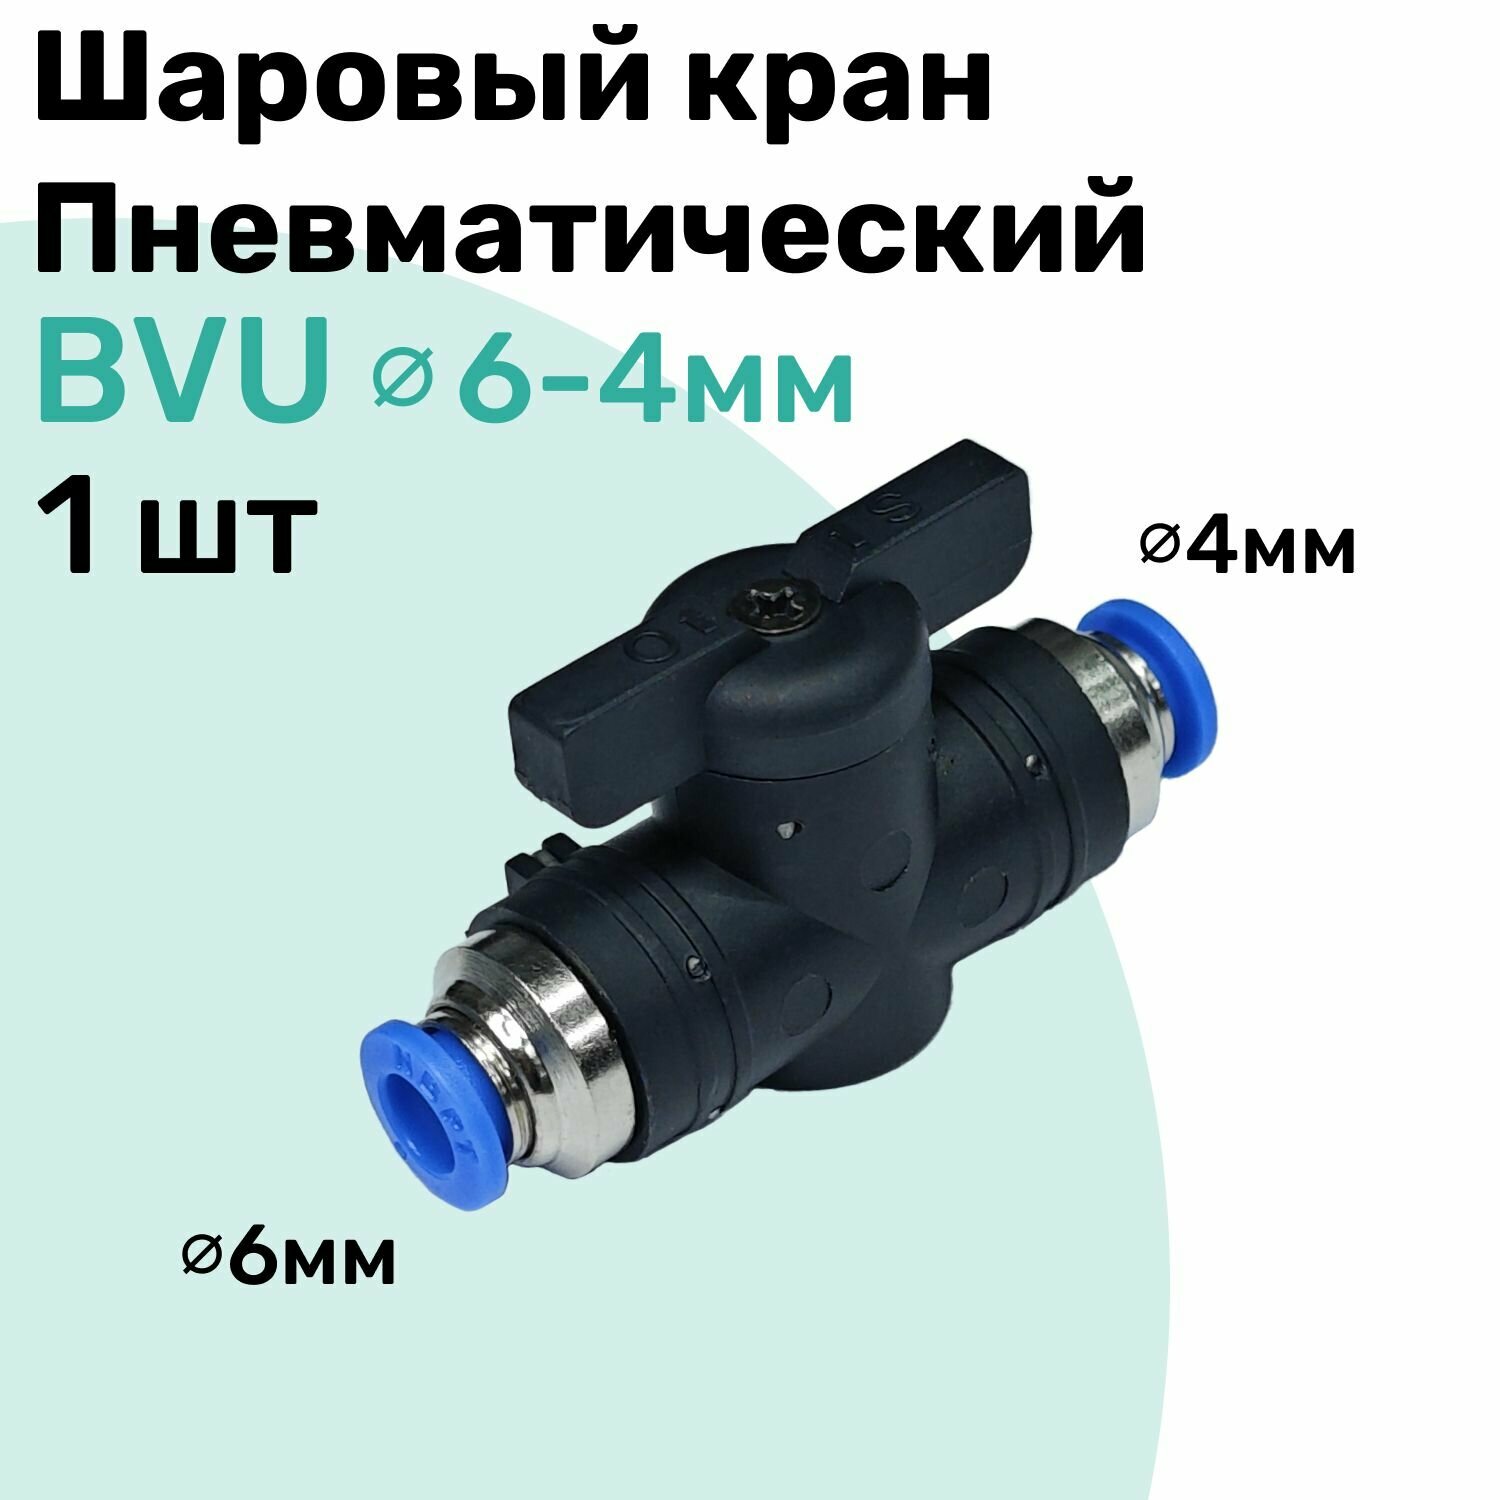 Шаровый кран пневматический BVU 6-4 мм, Пневмофитинг NBPT